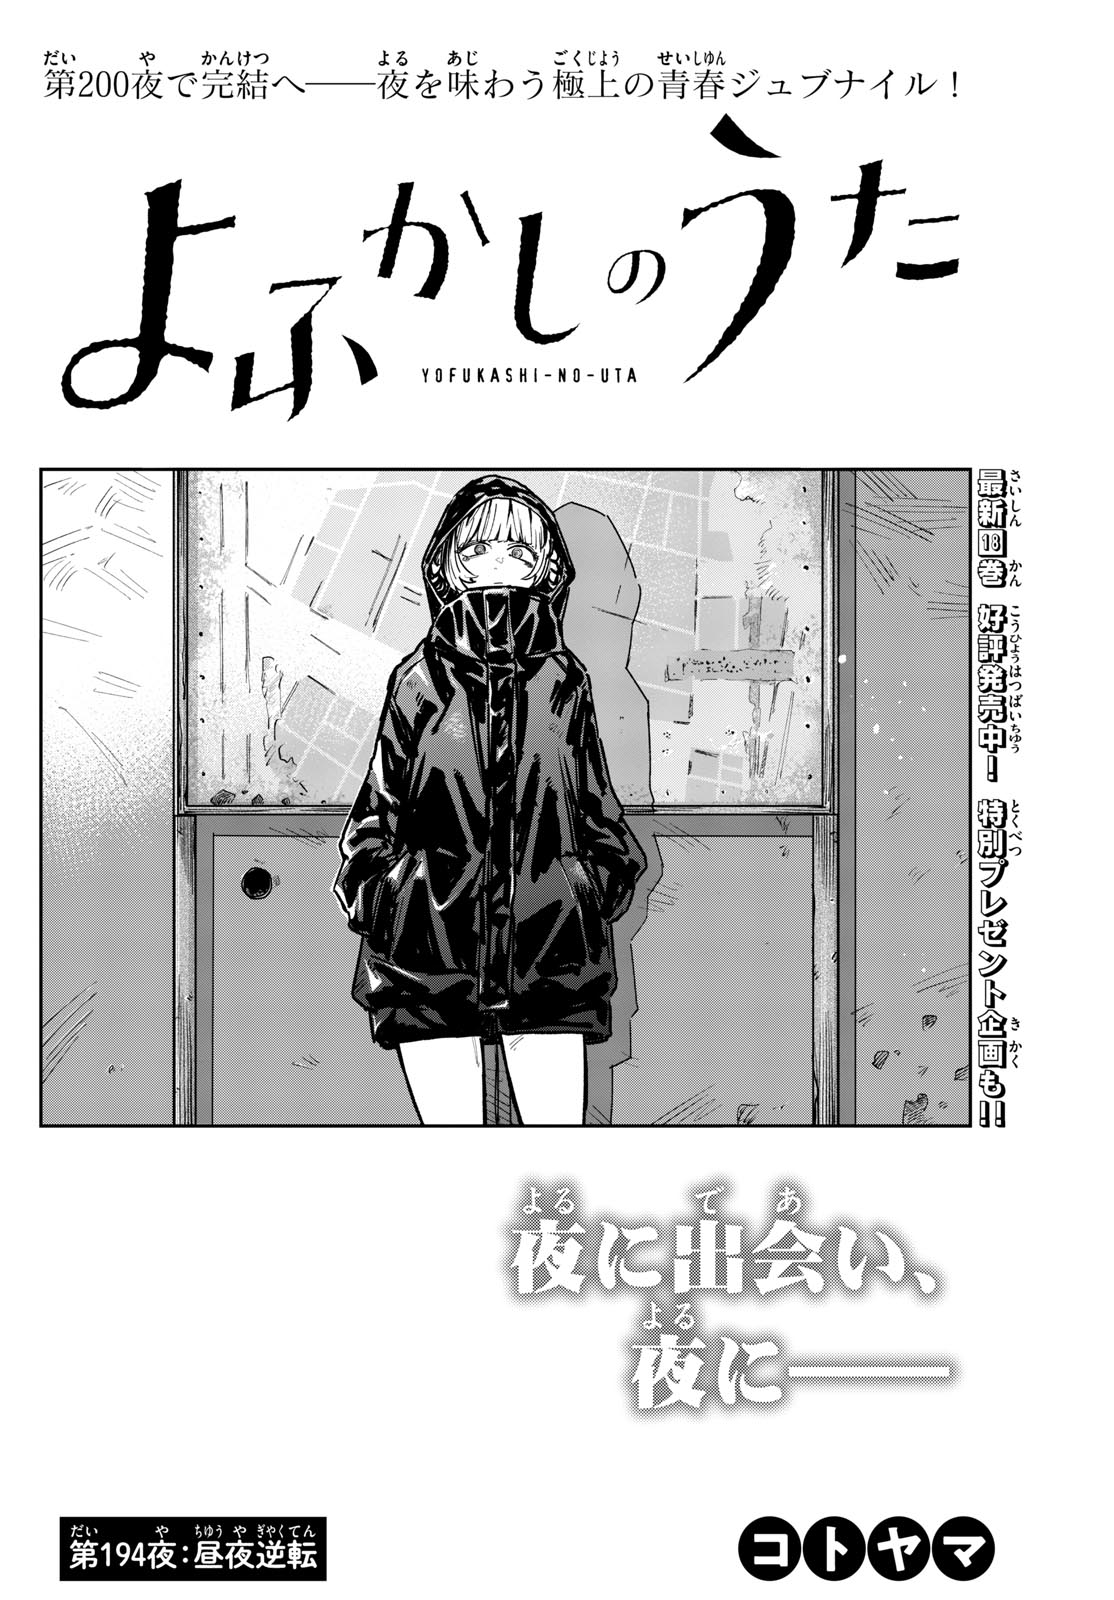 Yofukashi no Uta - Chapter 194 - Page 2